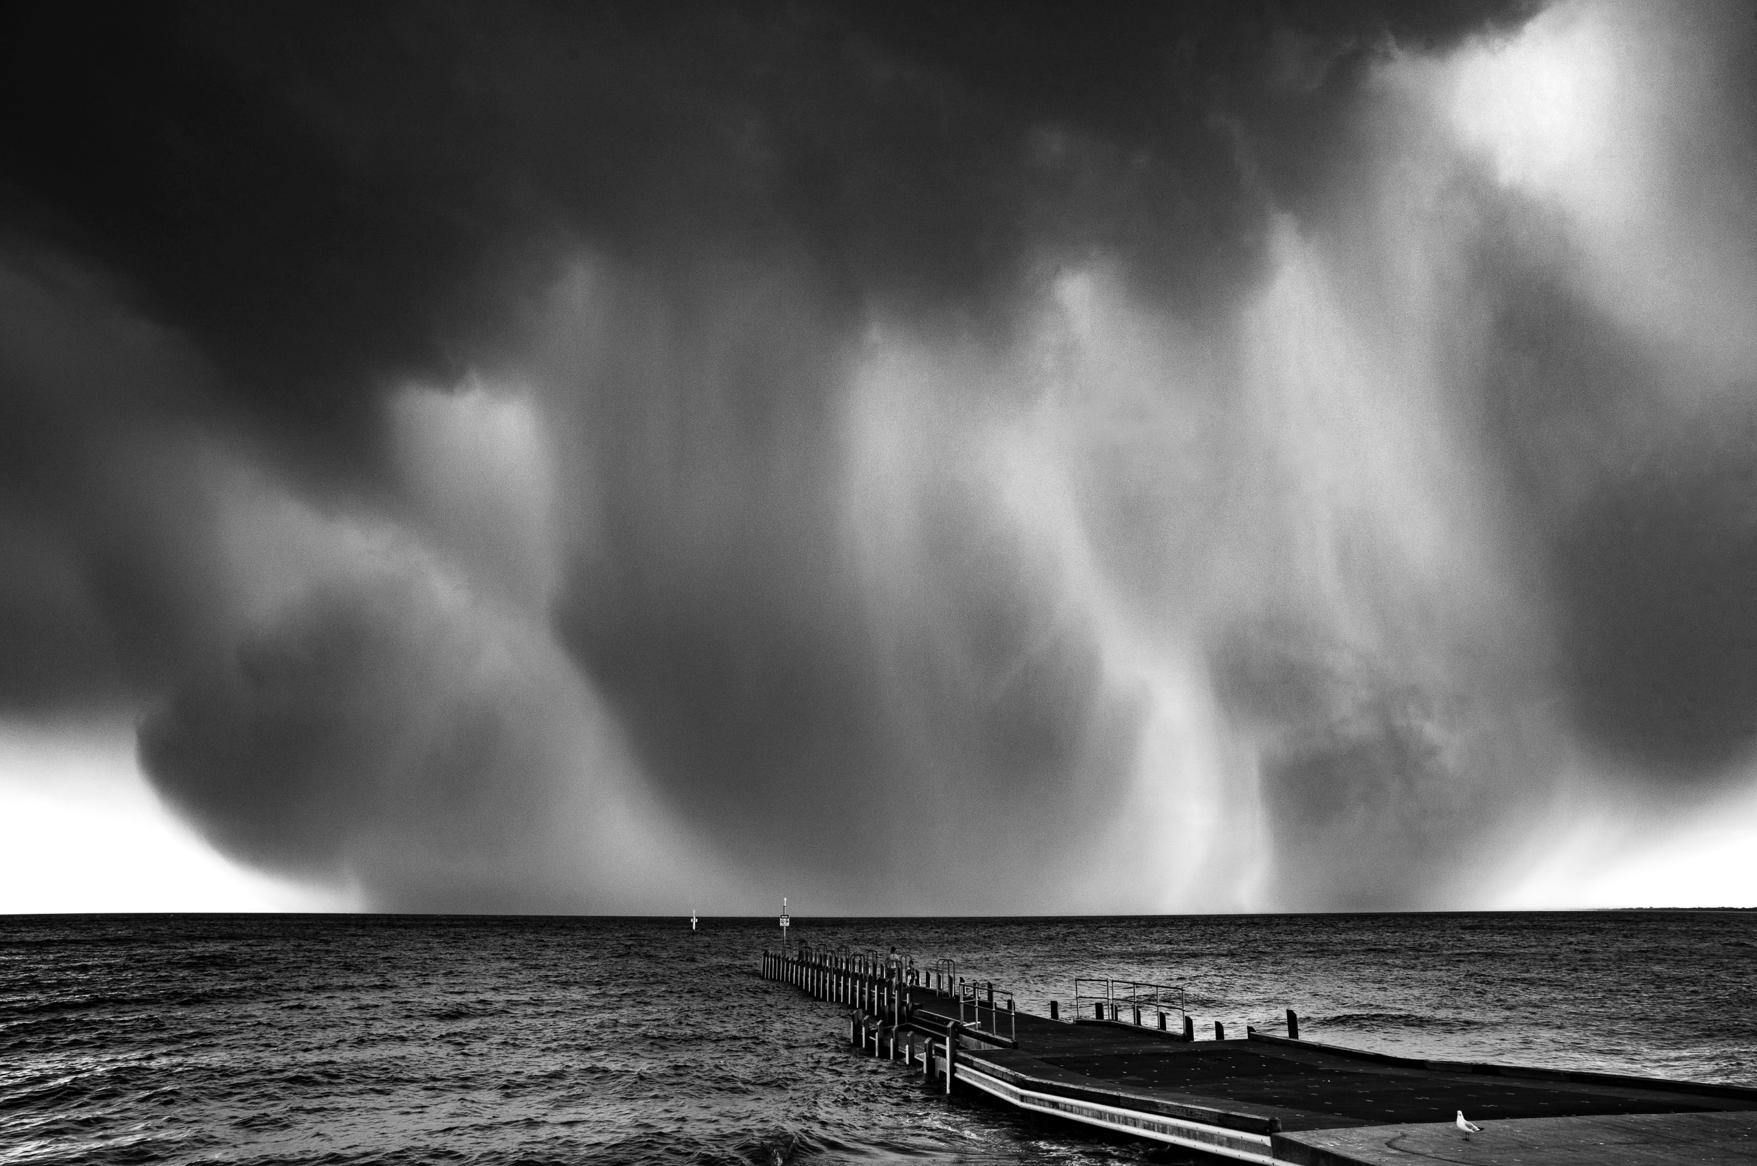 Heavy stormy clouds falling in a dark sea, Stormy, Frankston - Mornington Peninsula VIC